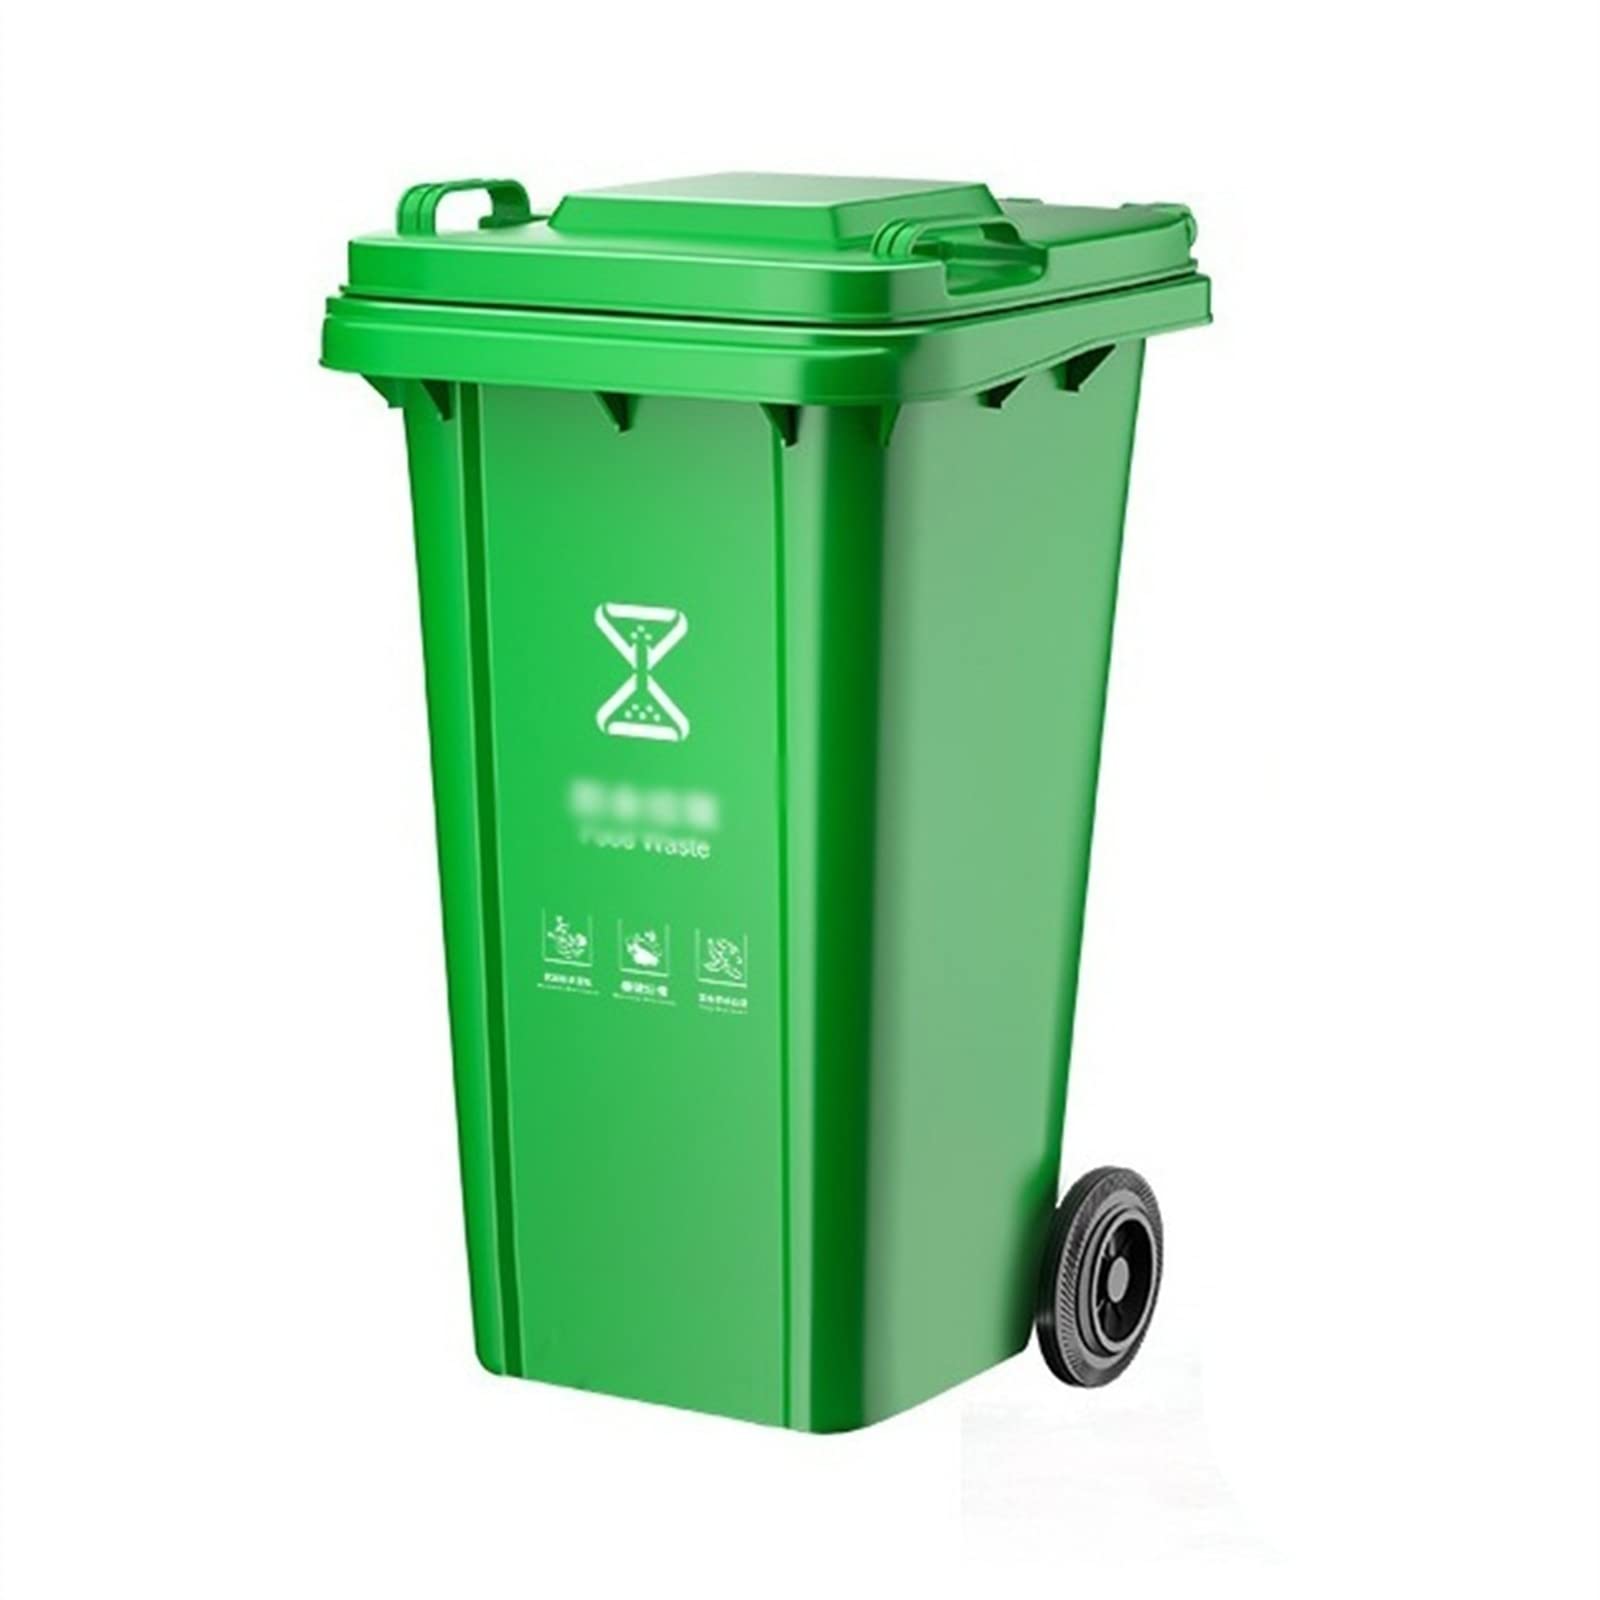 Trash can or recycle bin